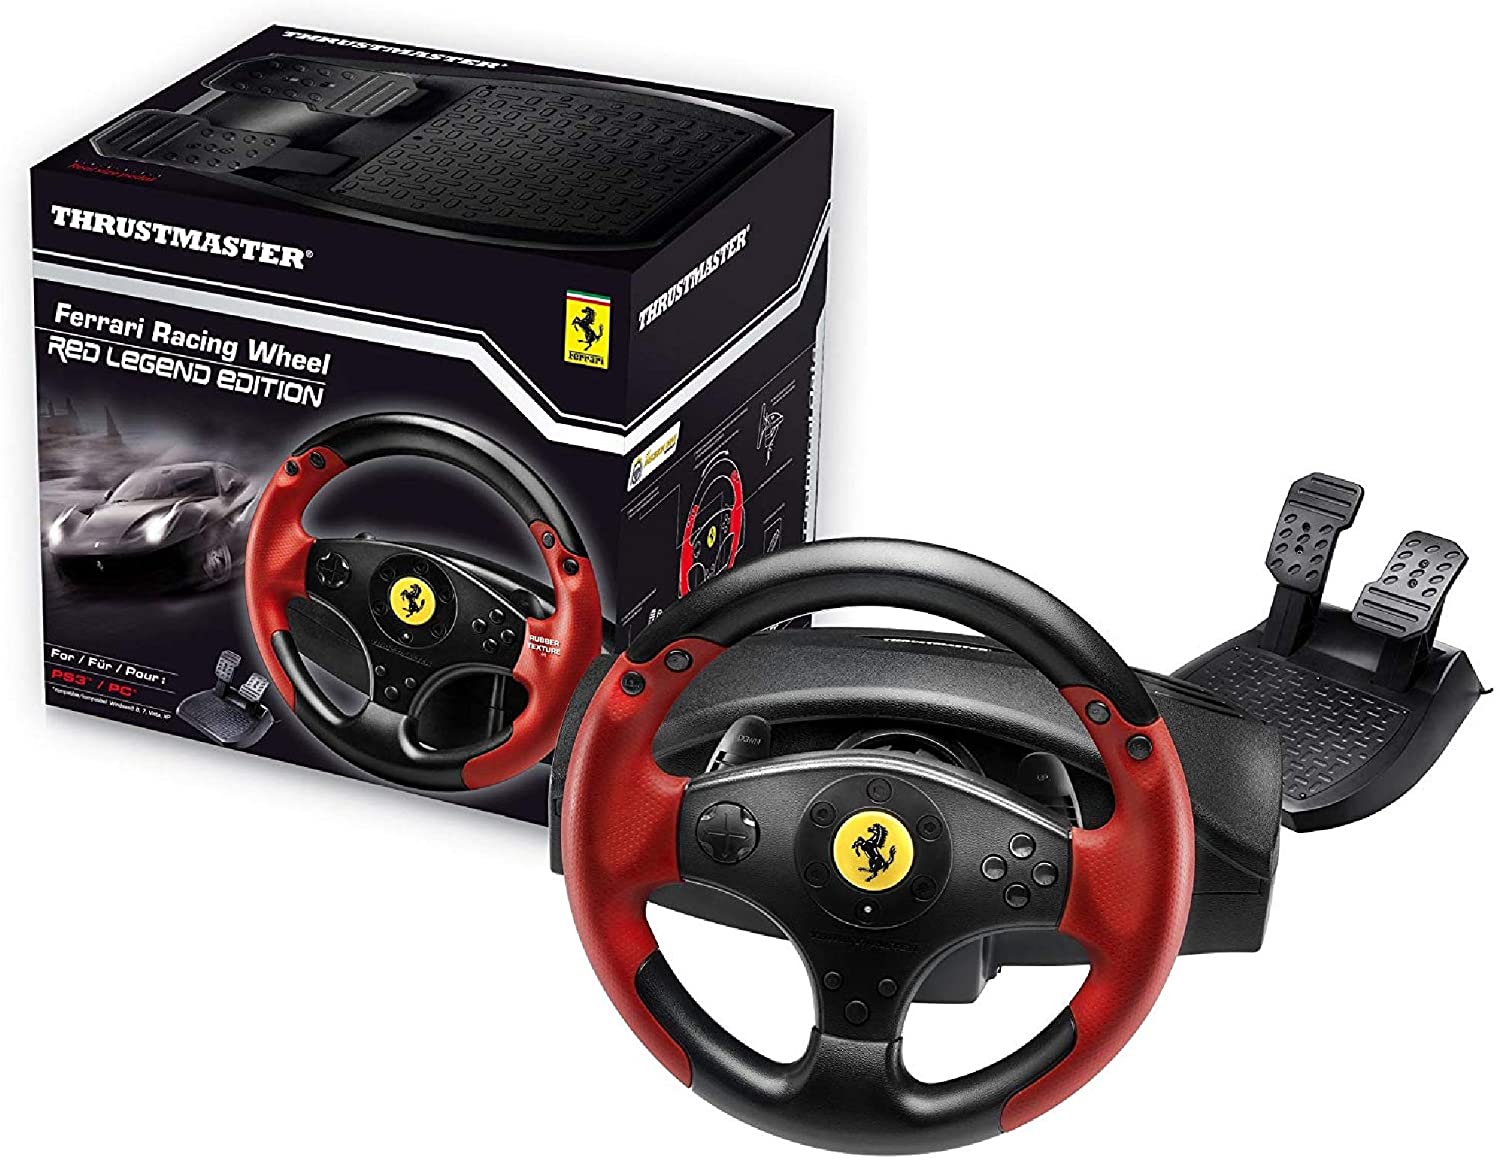 Thrustmaster Ferrari Racing Wheel Red Legend Edition PS3/PC